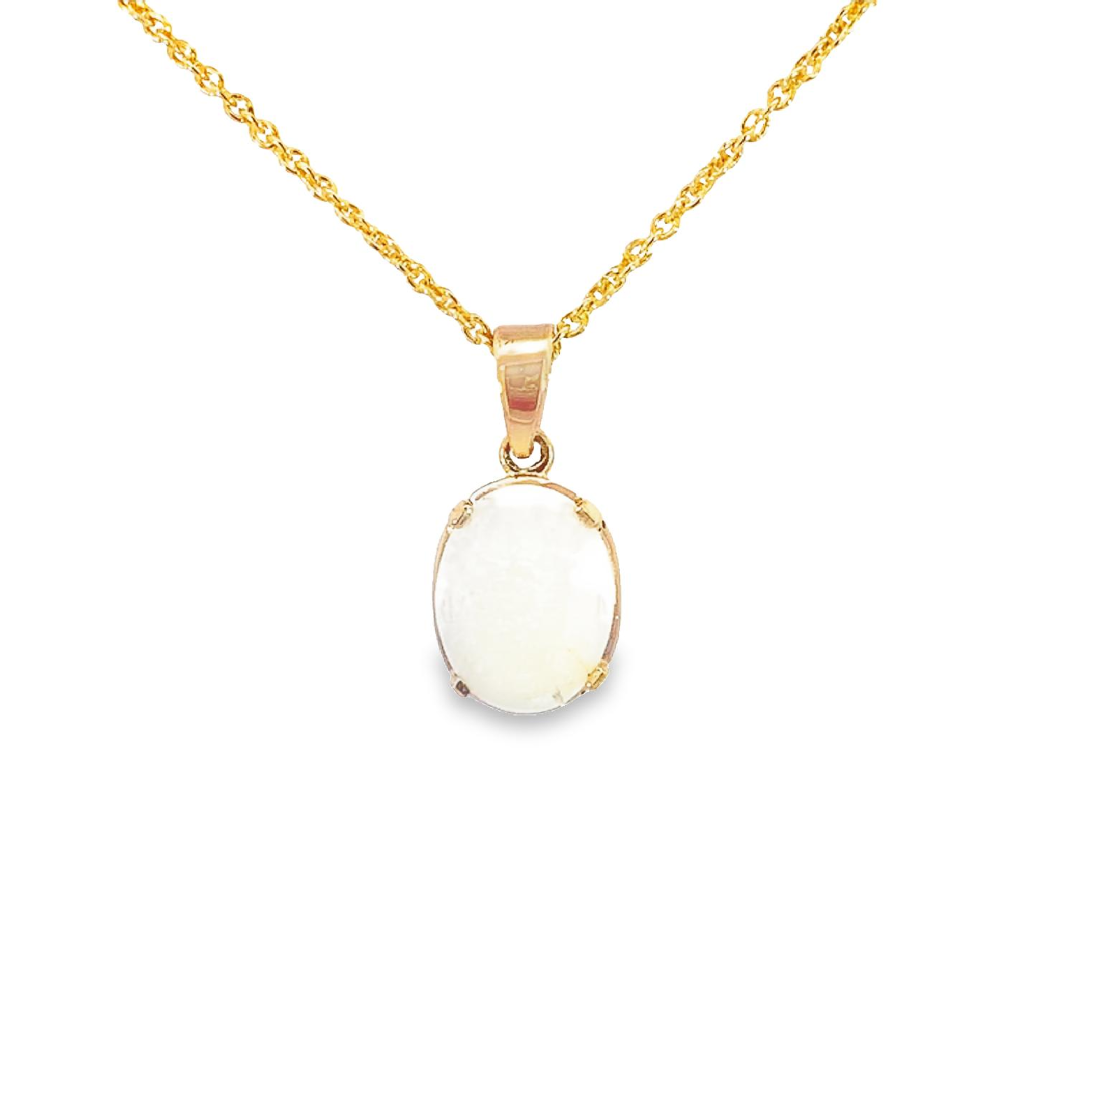 9kt Yellow Gold 9x7mm White Opal pendant - Masterpiece Jewellery Opal & Gems Sydney Australia | Online Shop